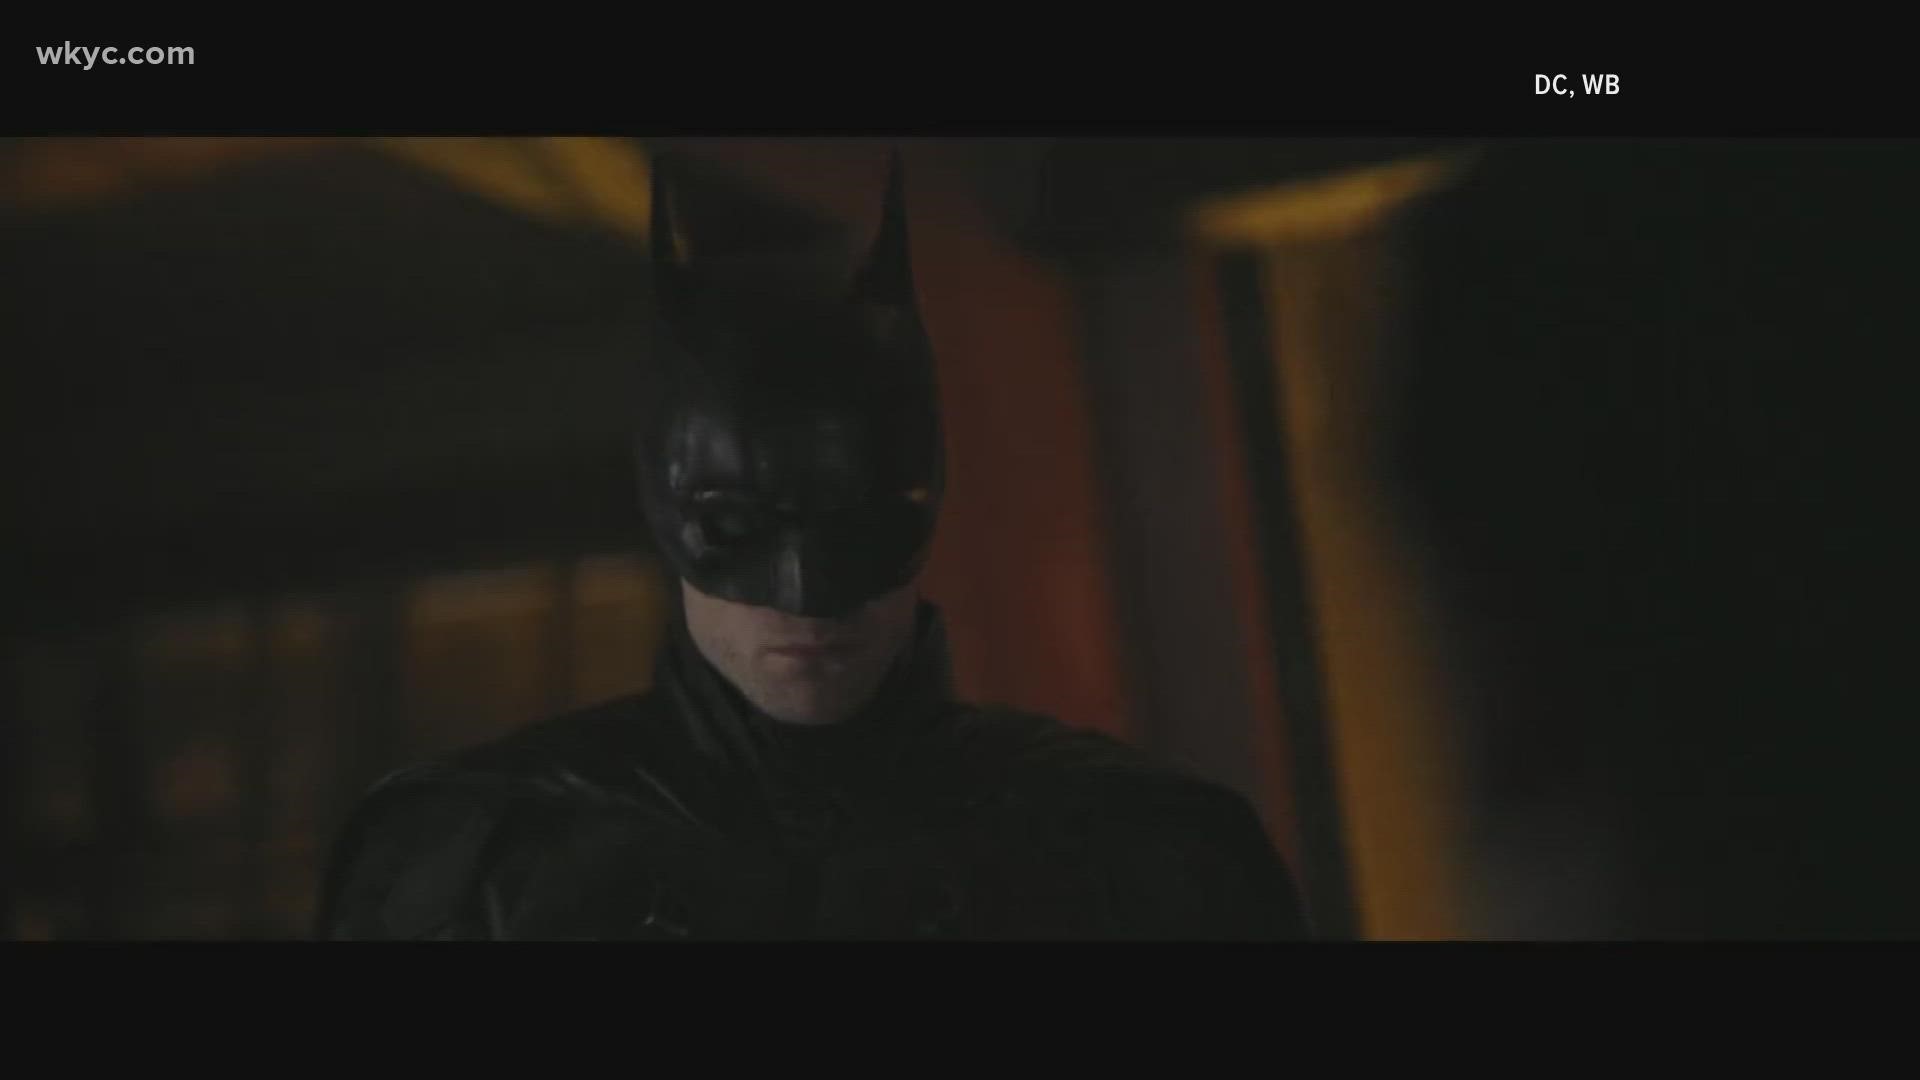 The movie stars Robert Pattinson as Batman and Zoey Kravitz as Catwoman.